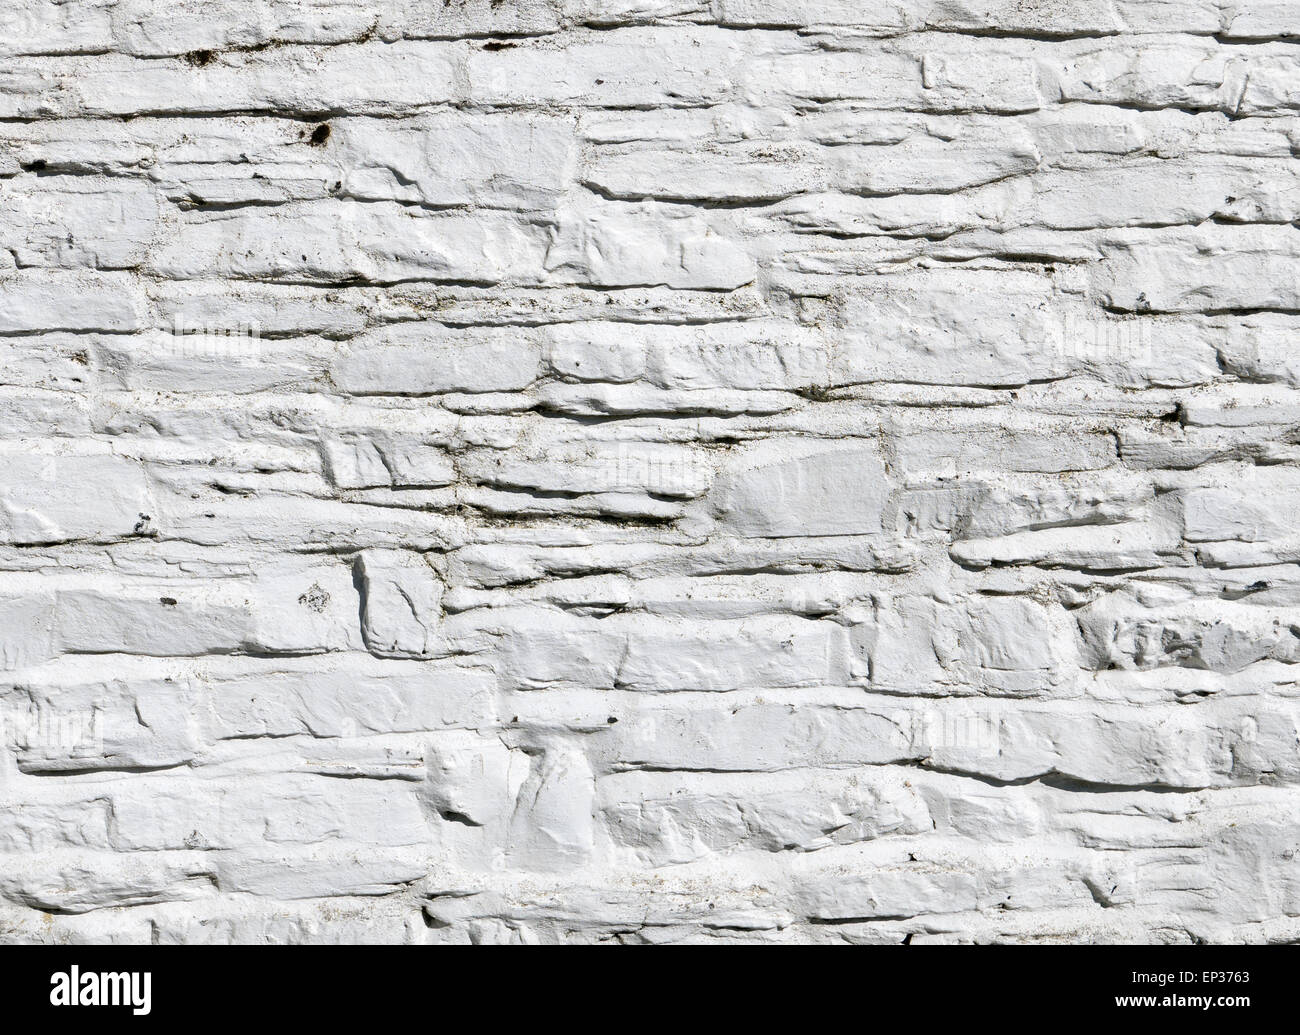 Whitewashed white paint on stone wall close up. Stock Photo